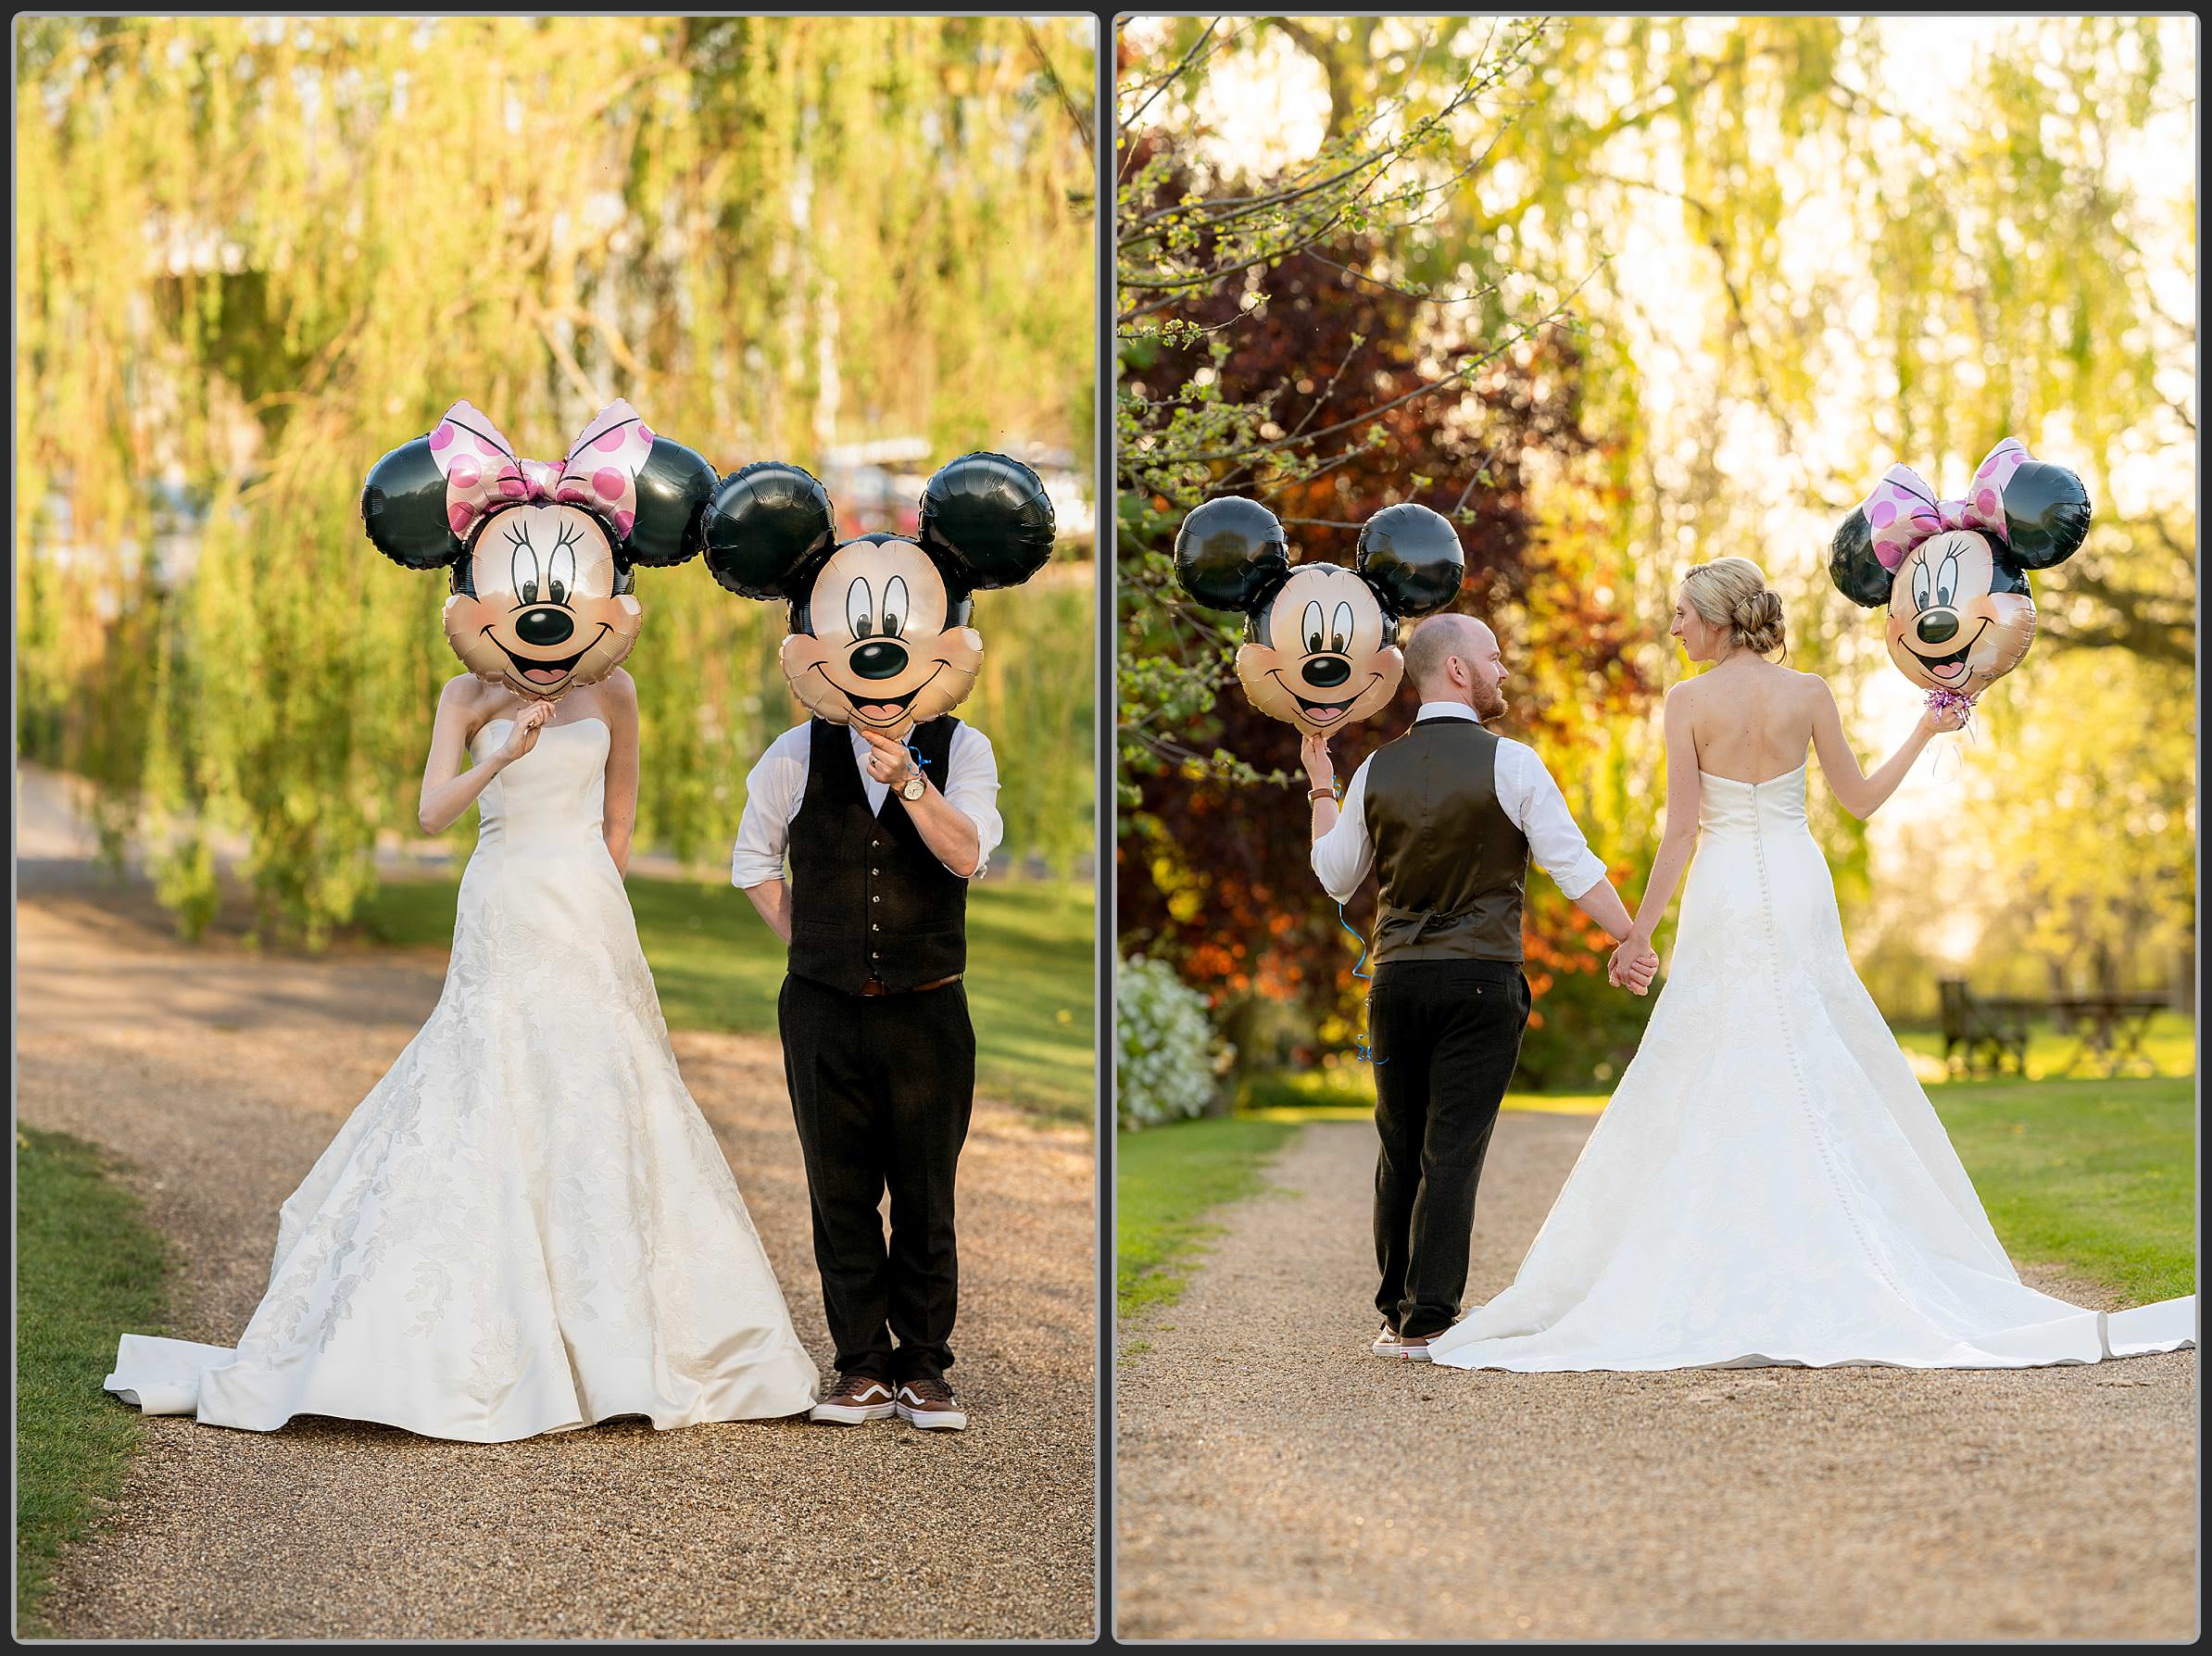 Disney themed wedding photos